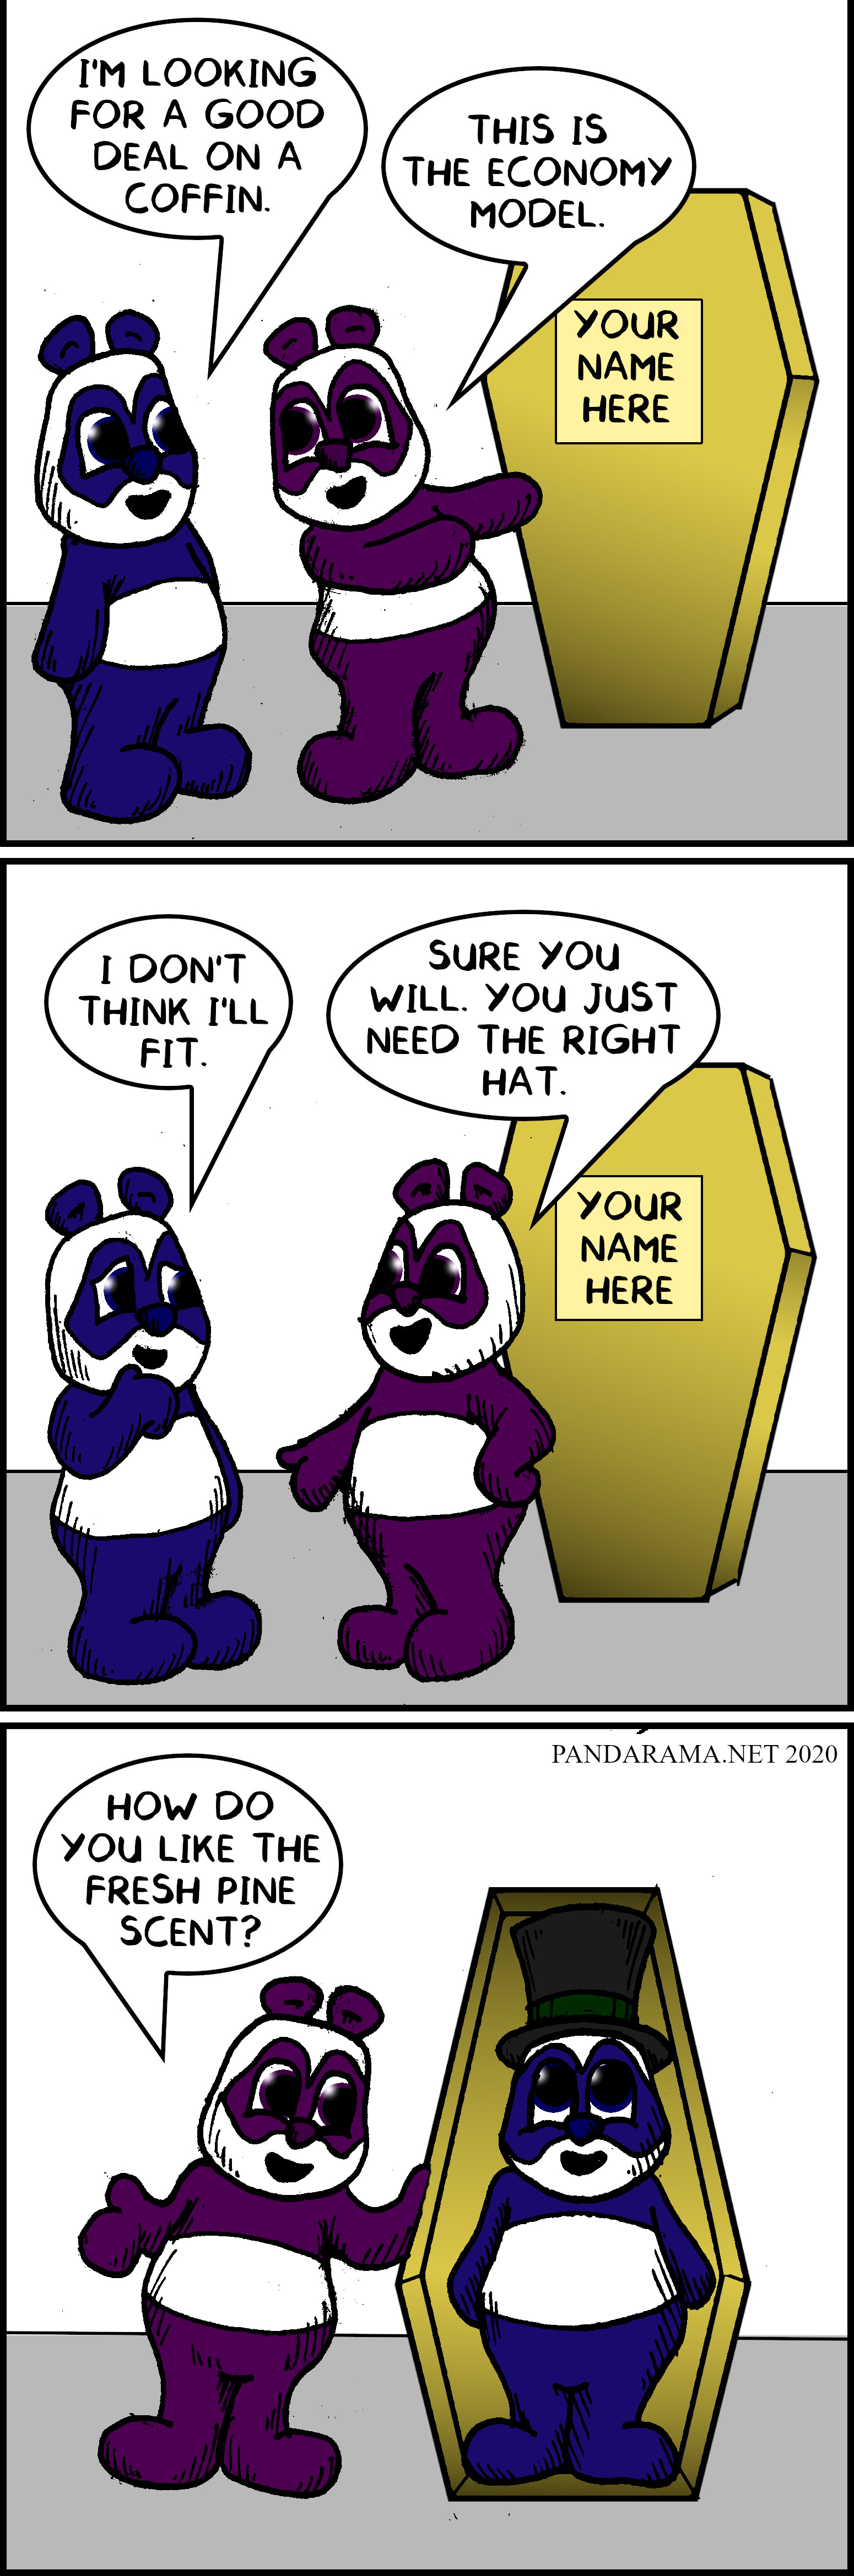 cartoon, webcomic, panda, toe pincher, tophat, pine box, coffin, pandarama.